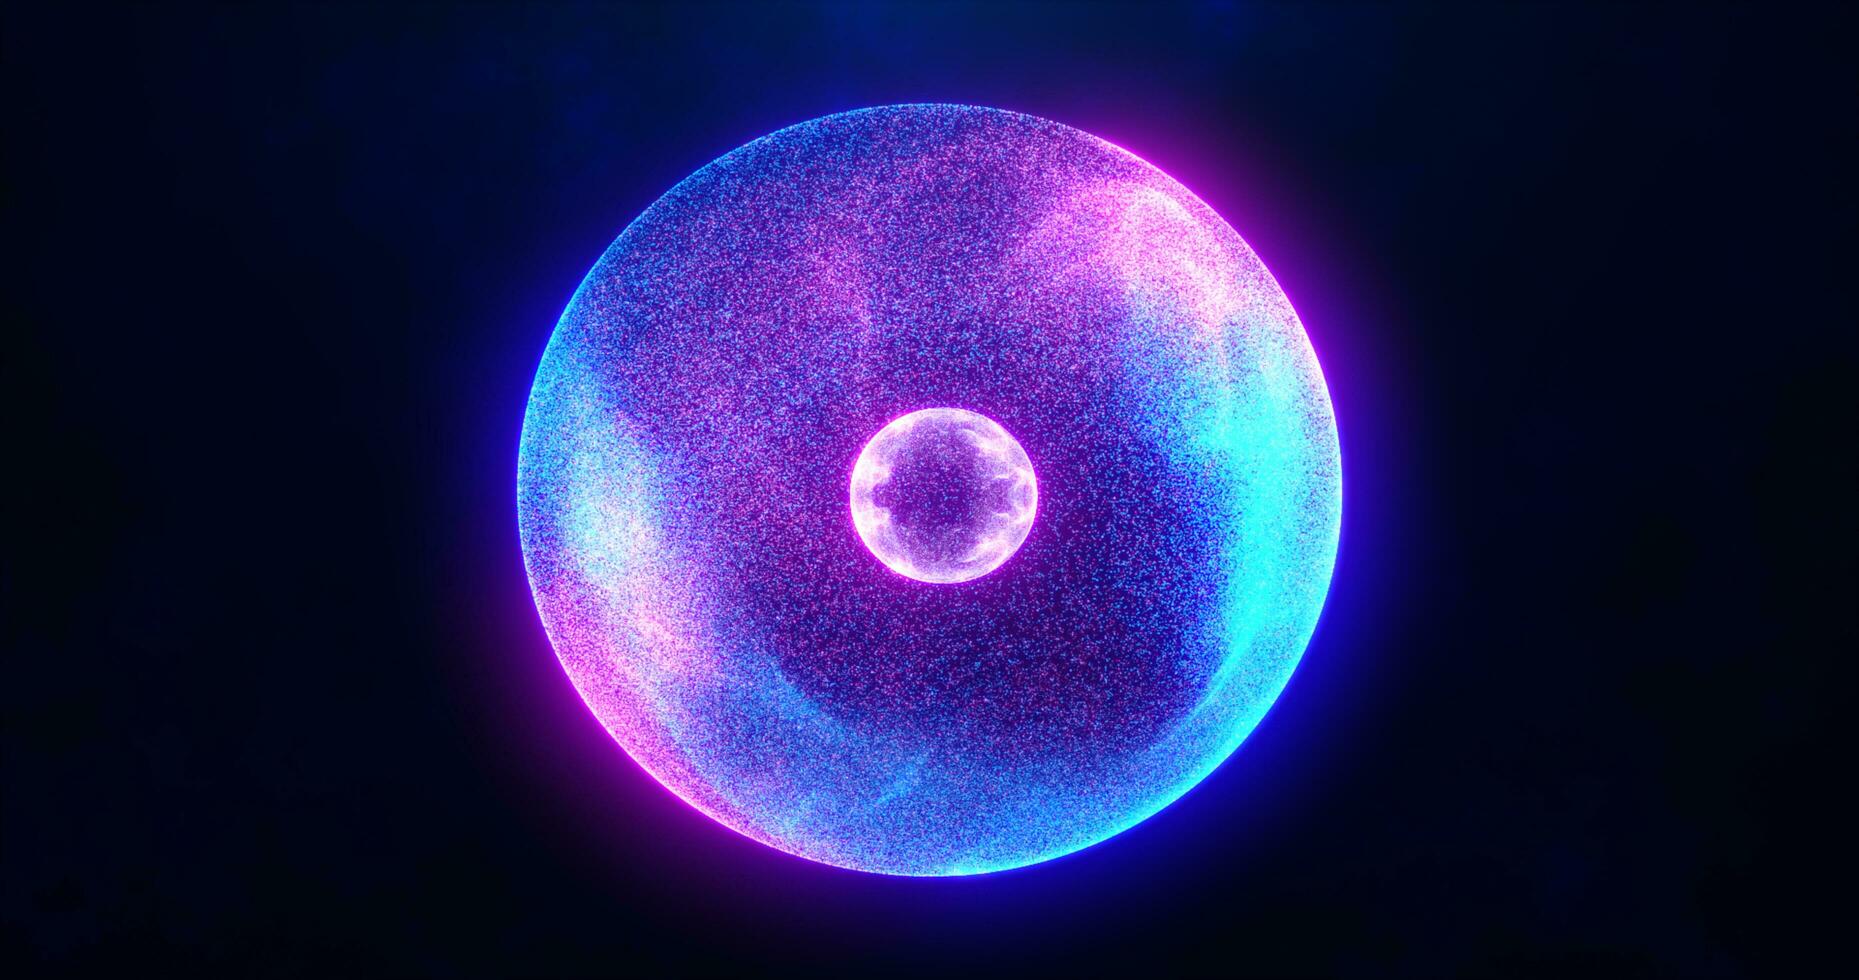 azul roxa energia esfera com brilhando brilhante partículas, átomo com elétrons e elétrica Magia campo científico futurista oi-tech abstrato fundo foto